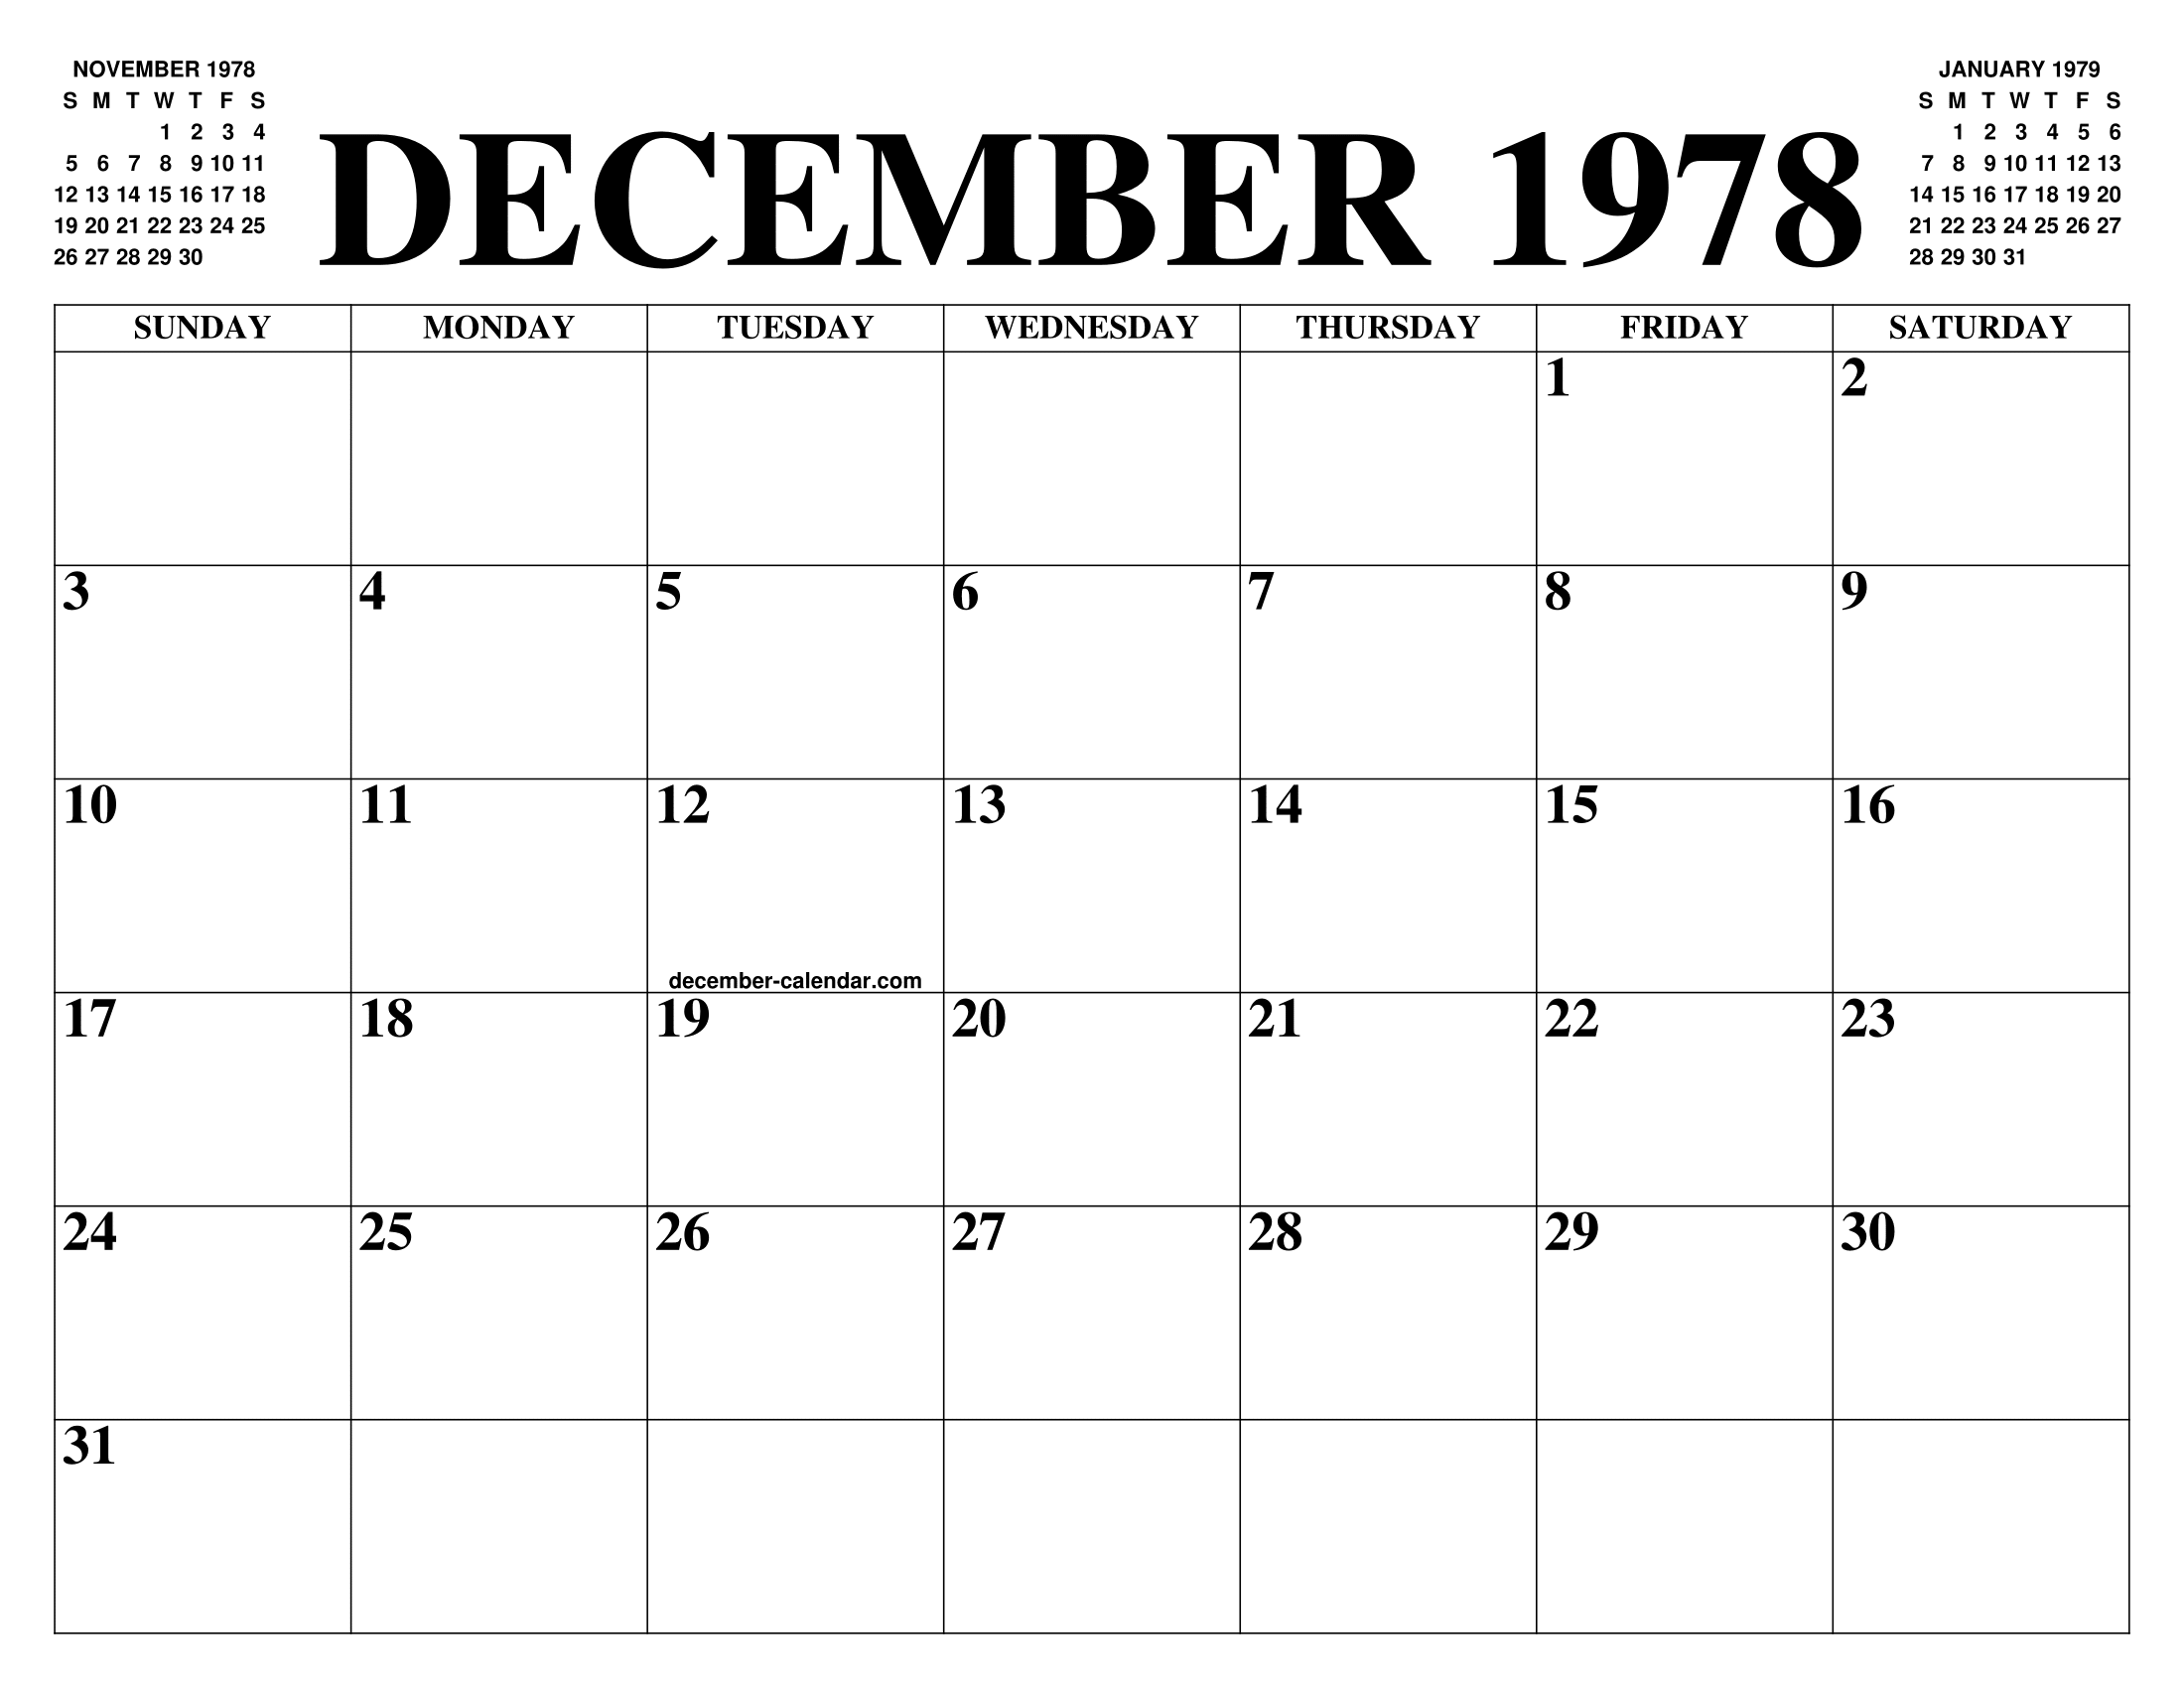 DECEMBER 1978 CALENDAR OF THE MONTH: FREE PRINTABLE DECEMBER CALENDAR